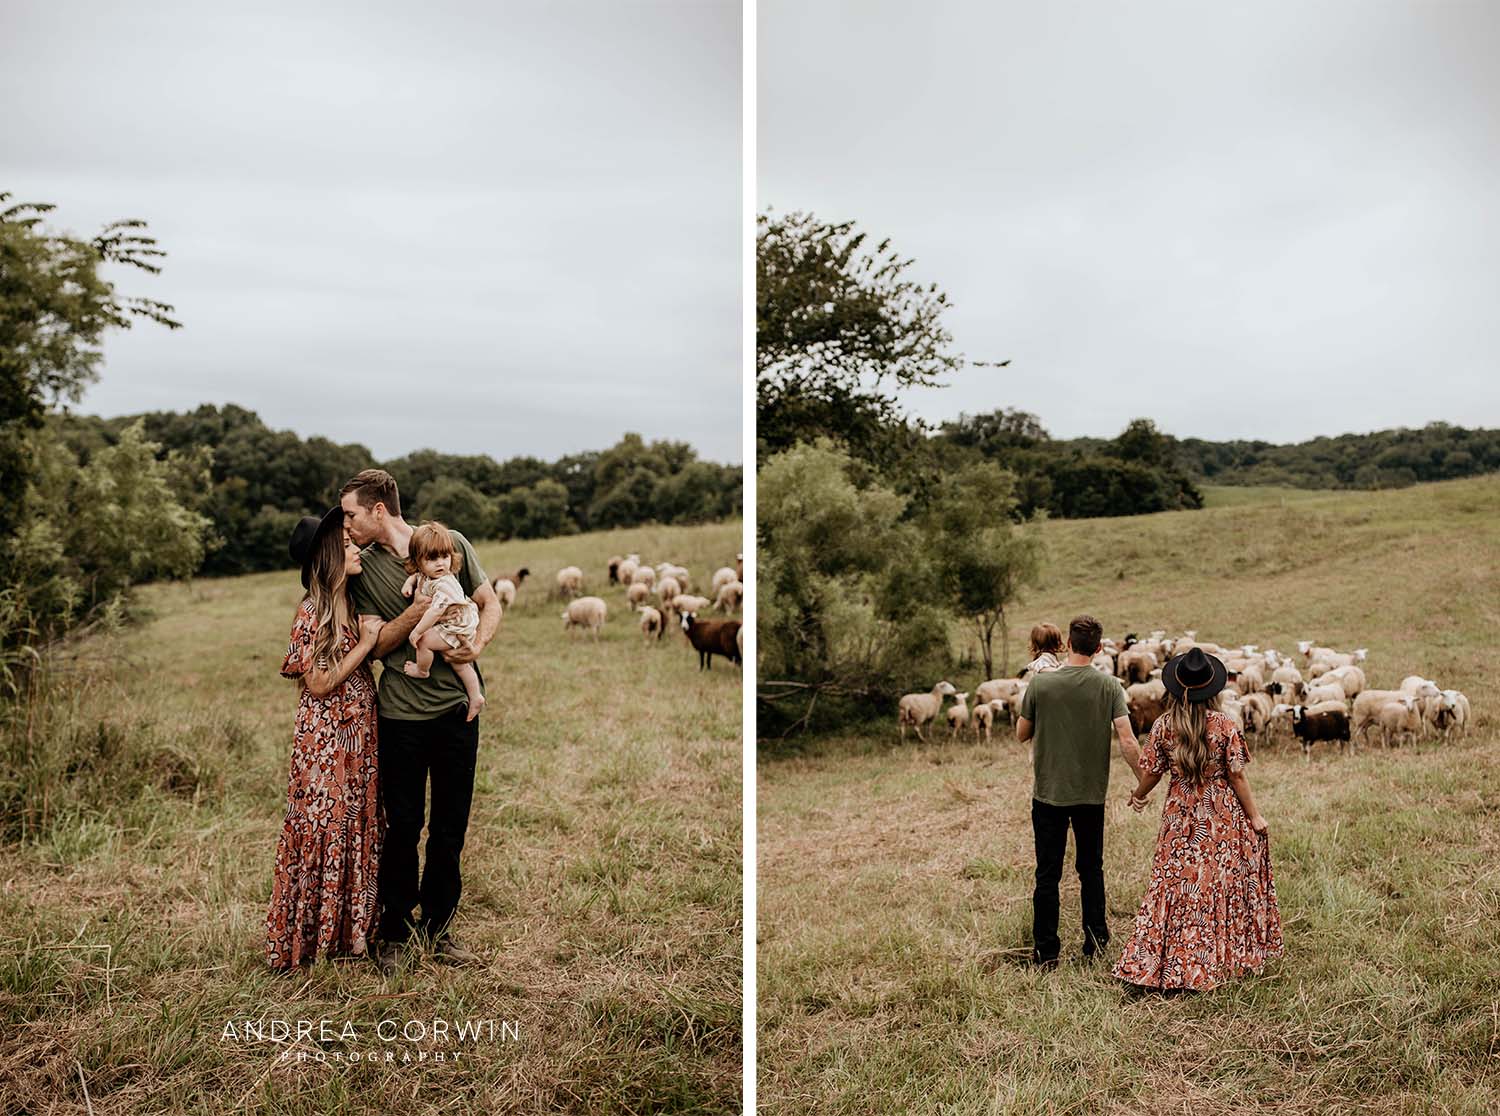 Andrea Corwin Photography Family Photographer Wichita Photographer Kansas - Sheep Farm 1